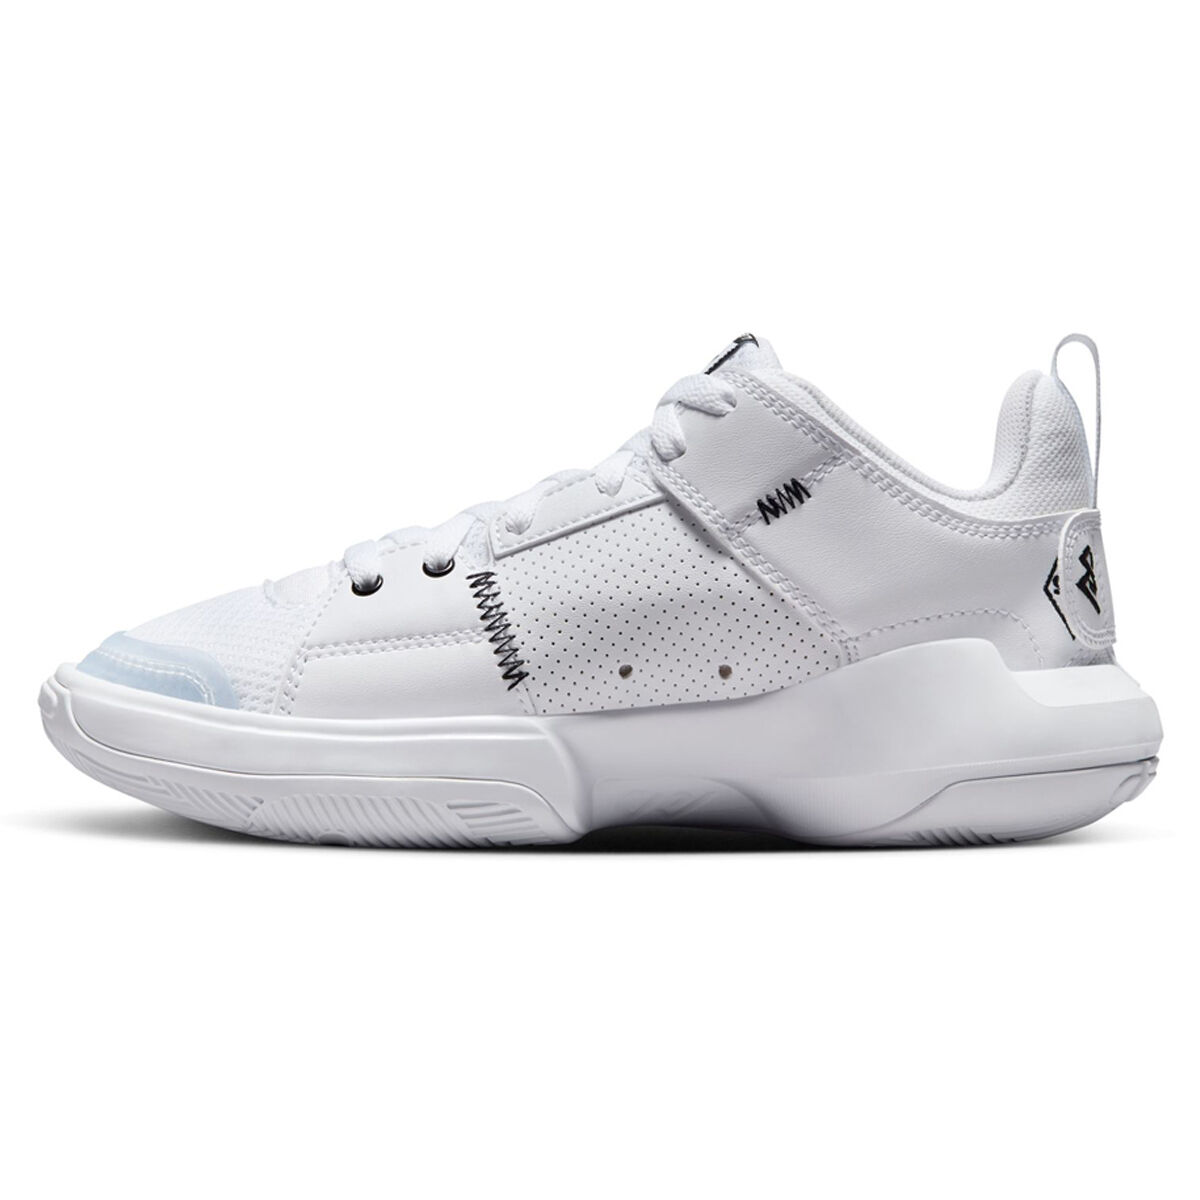 Jordan One Take 5 GS Kids Basketball Shoes White/Black US 4, White/Black, rebel_hi-res